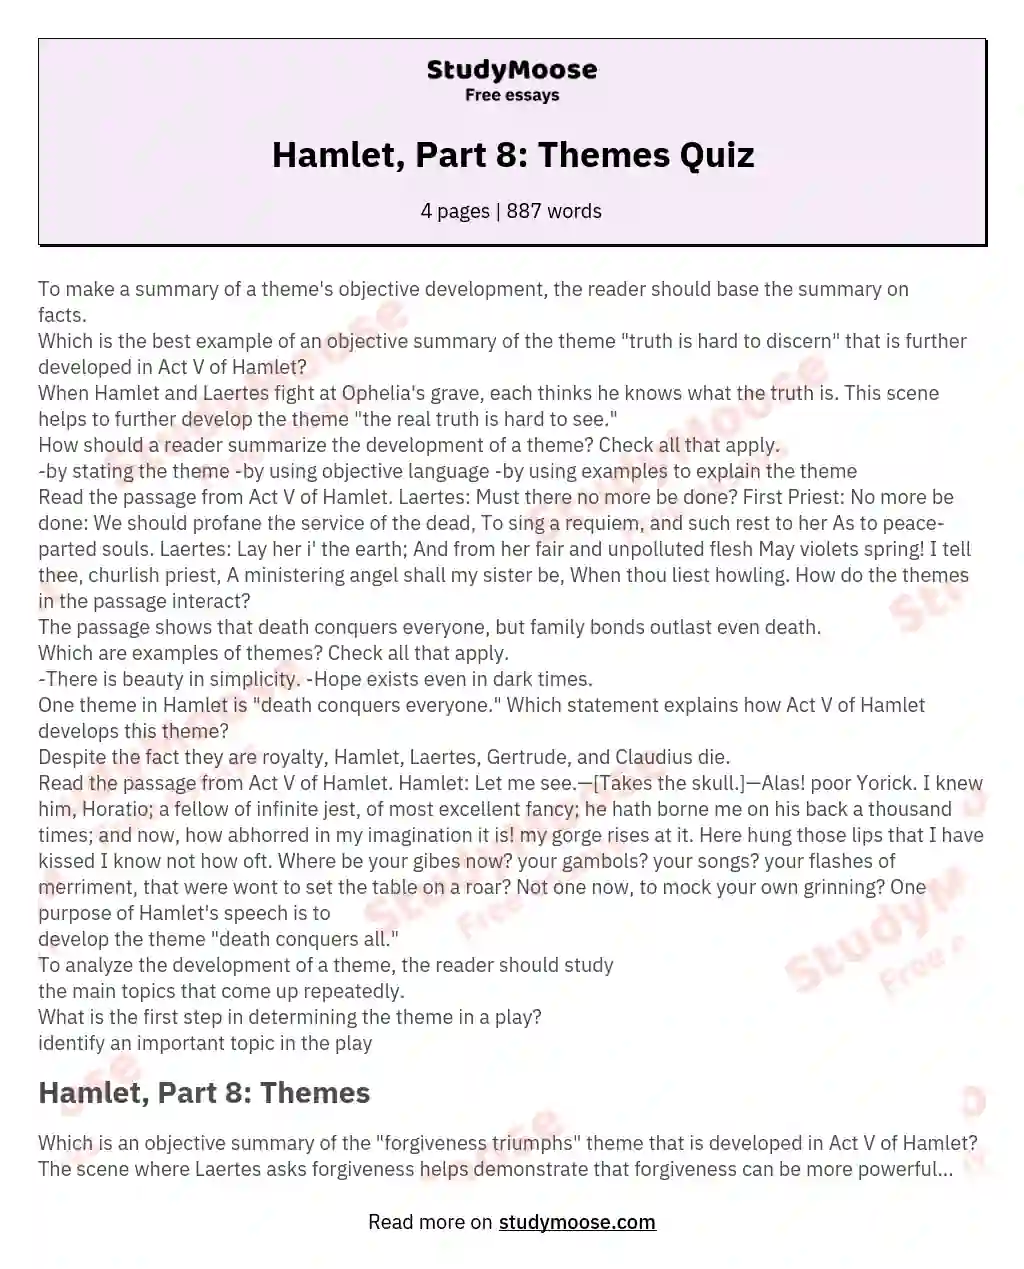 Hamlet, Part 8: Themes Quiz